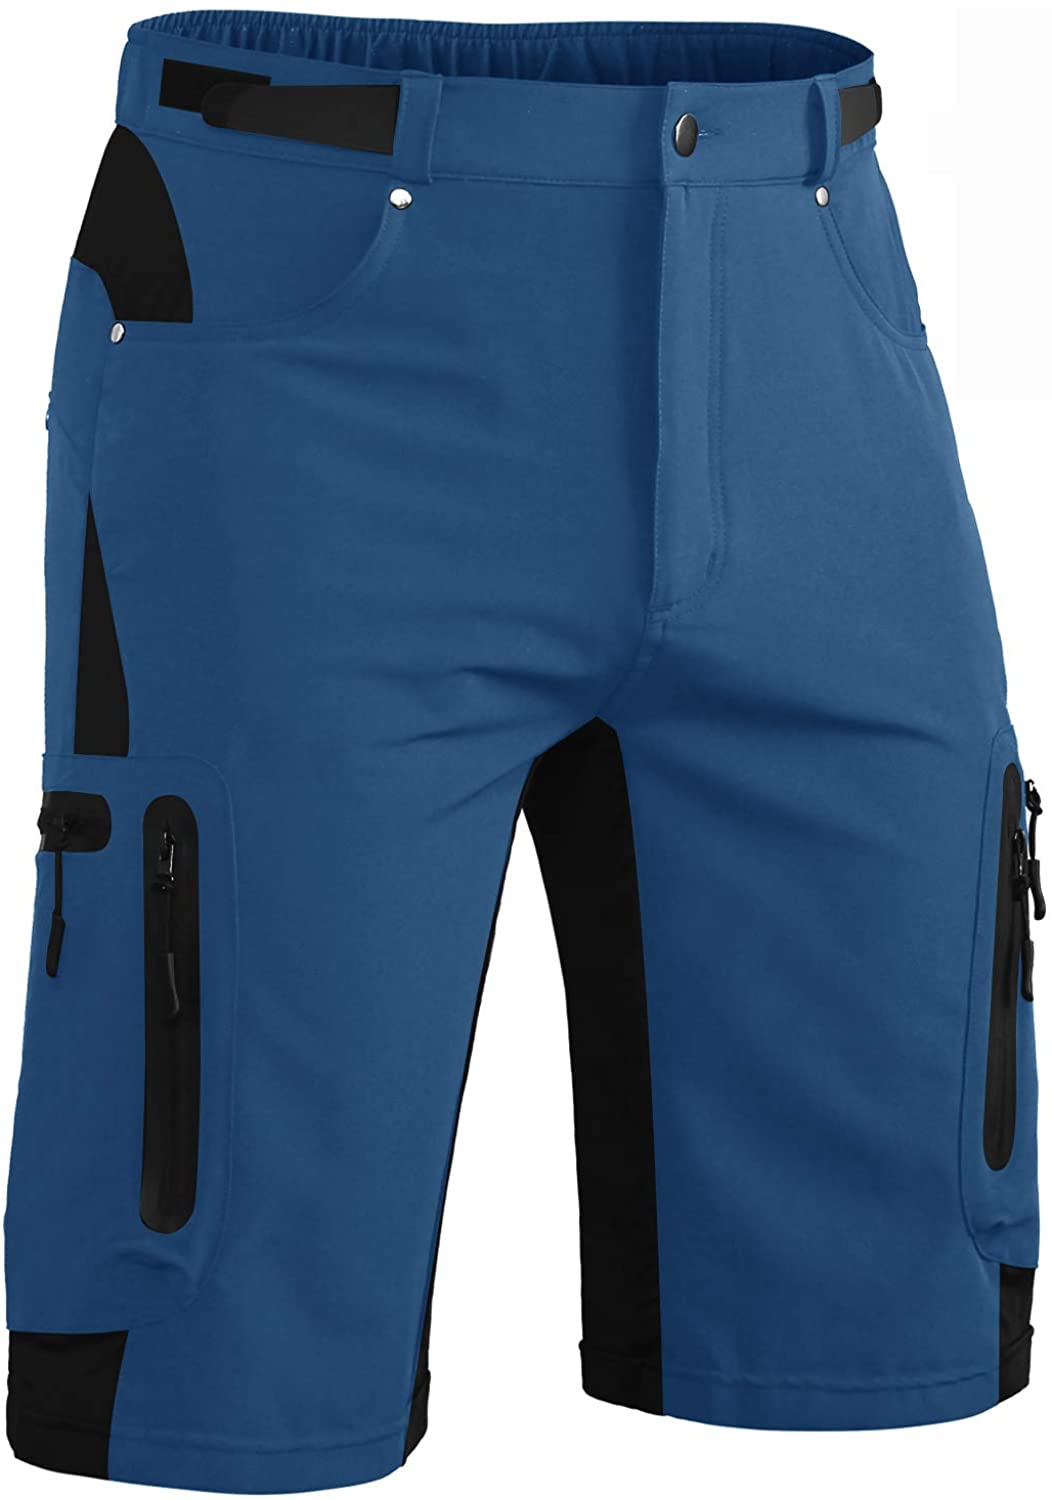 Hiauspor Men's Hiking Cargo Shorts Lightweight Quick Dry Stretch MTB Shorts for Goft Fishing Tactical Outdoor Casual Shorts Indigo / Small